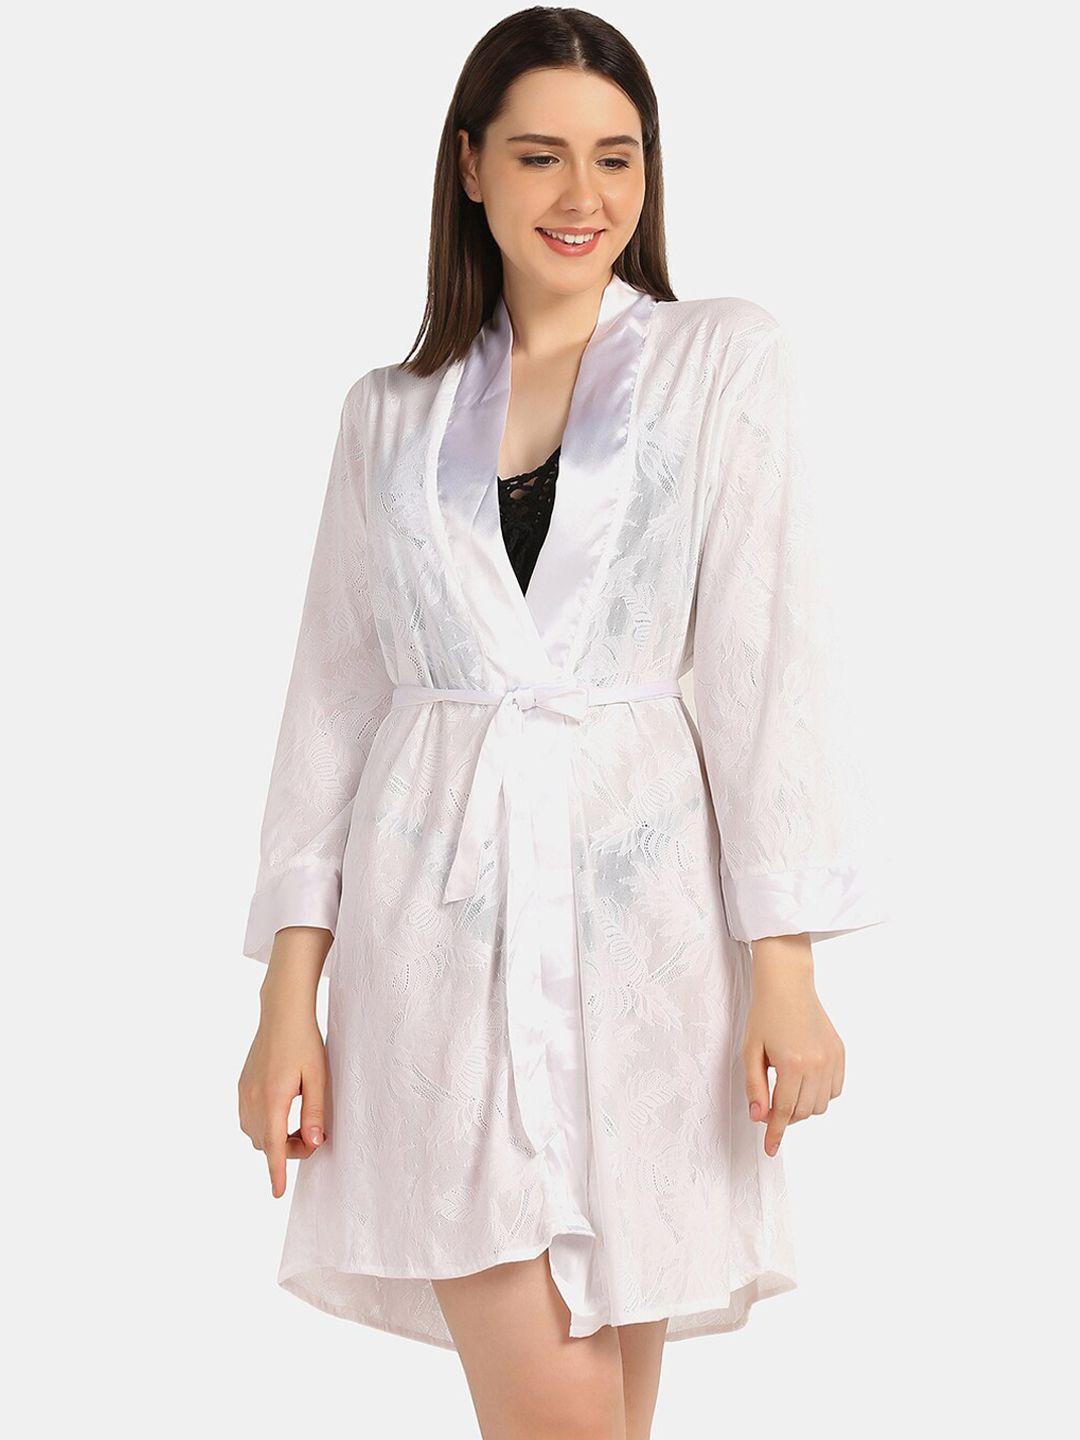 da intimo women white self-design lace loungewear robe